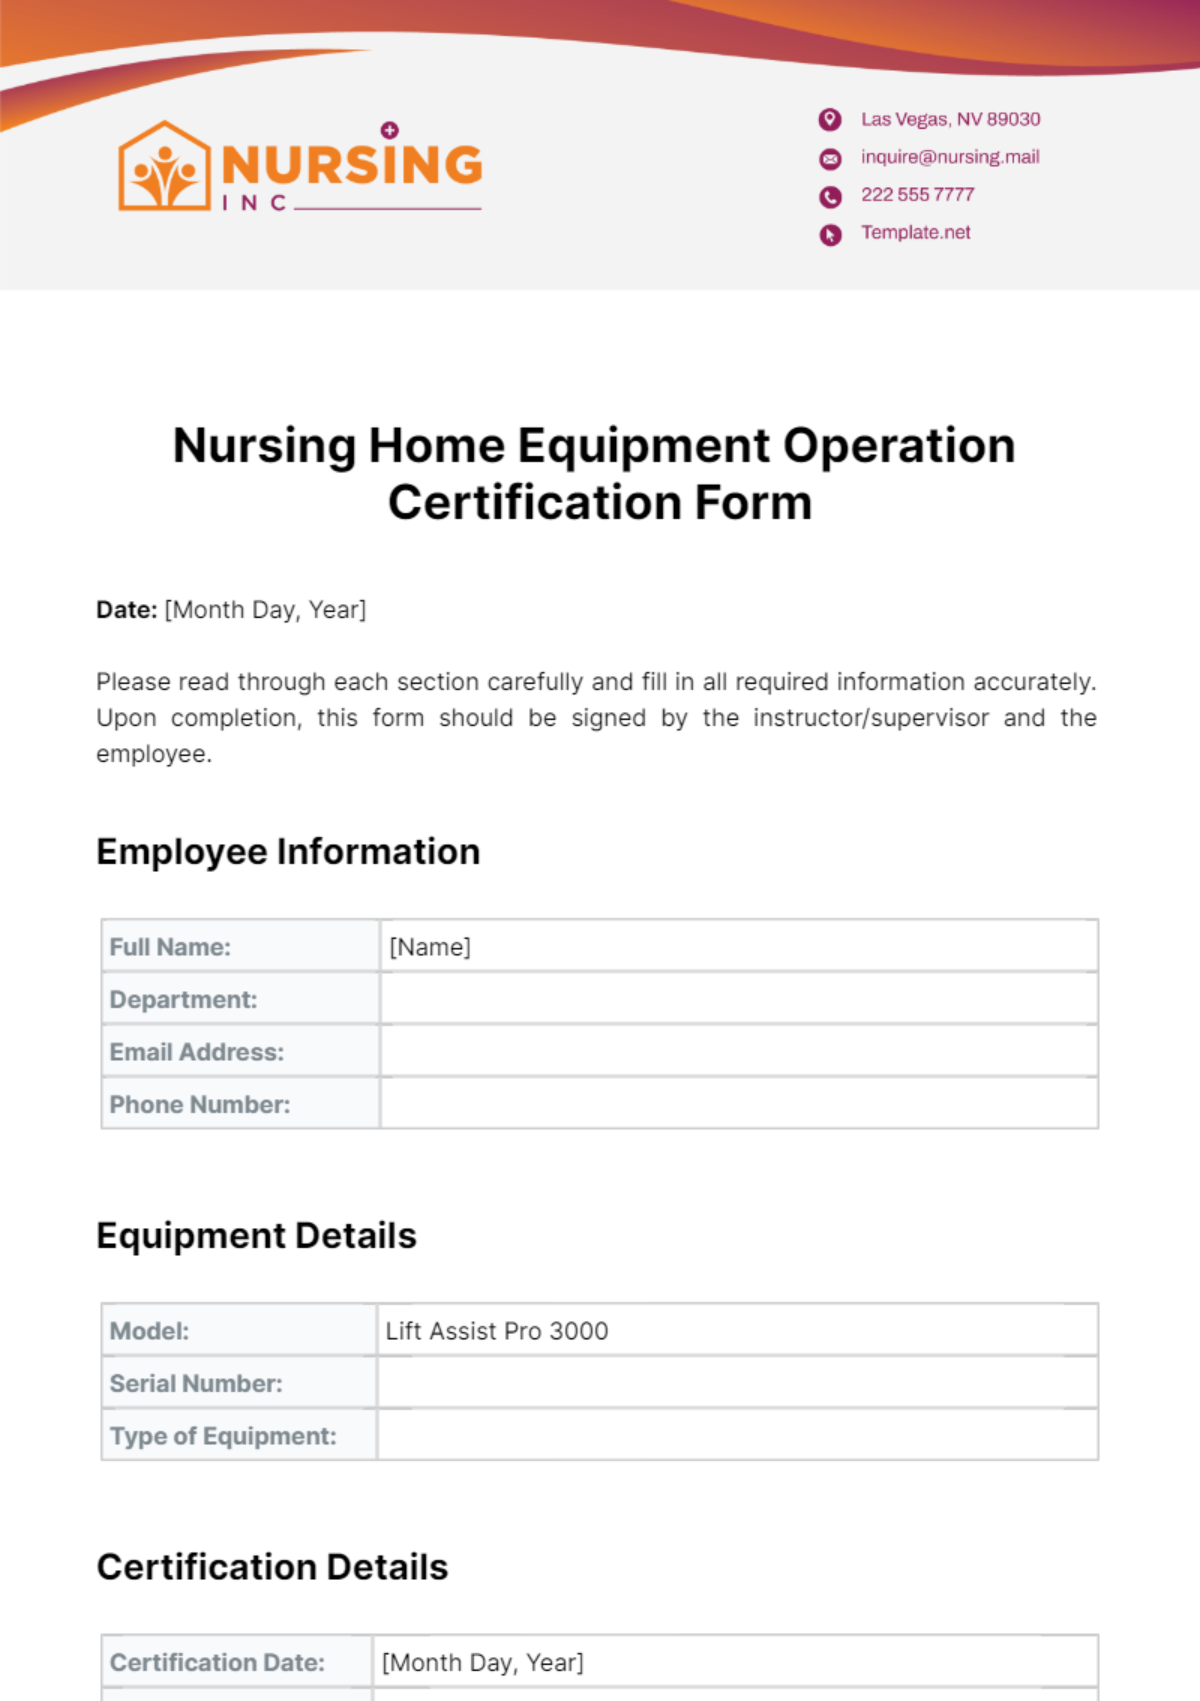 Nursing Home Equipment Operation Certification Form Template